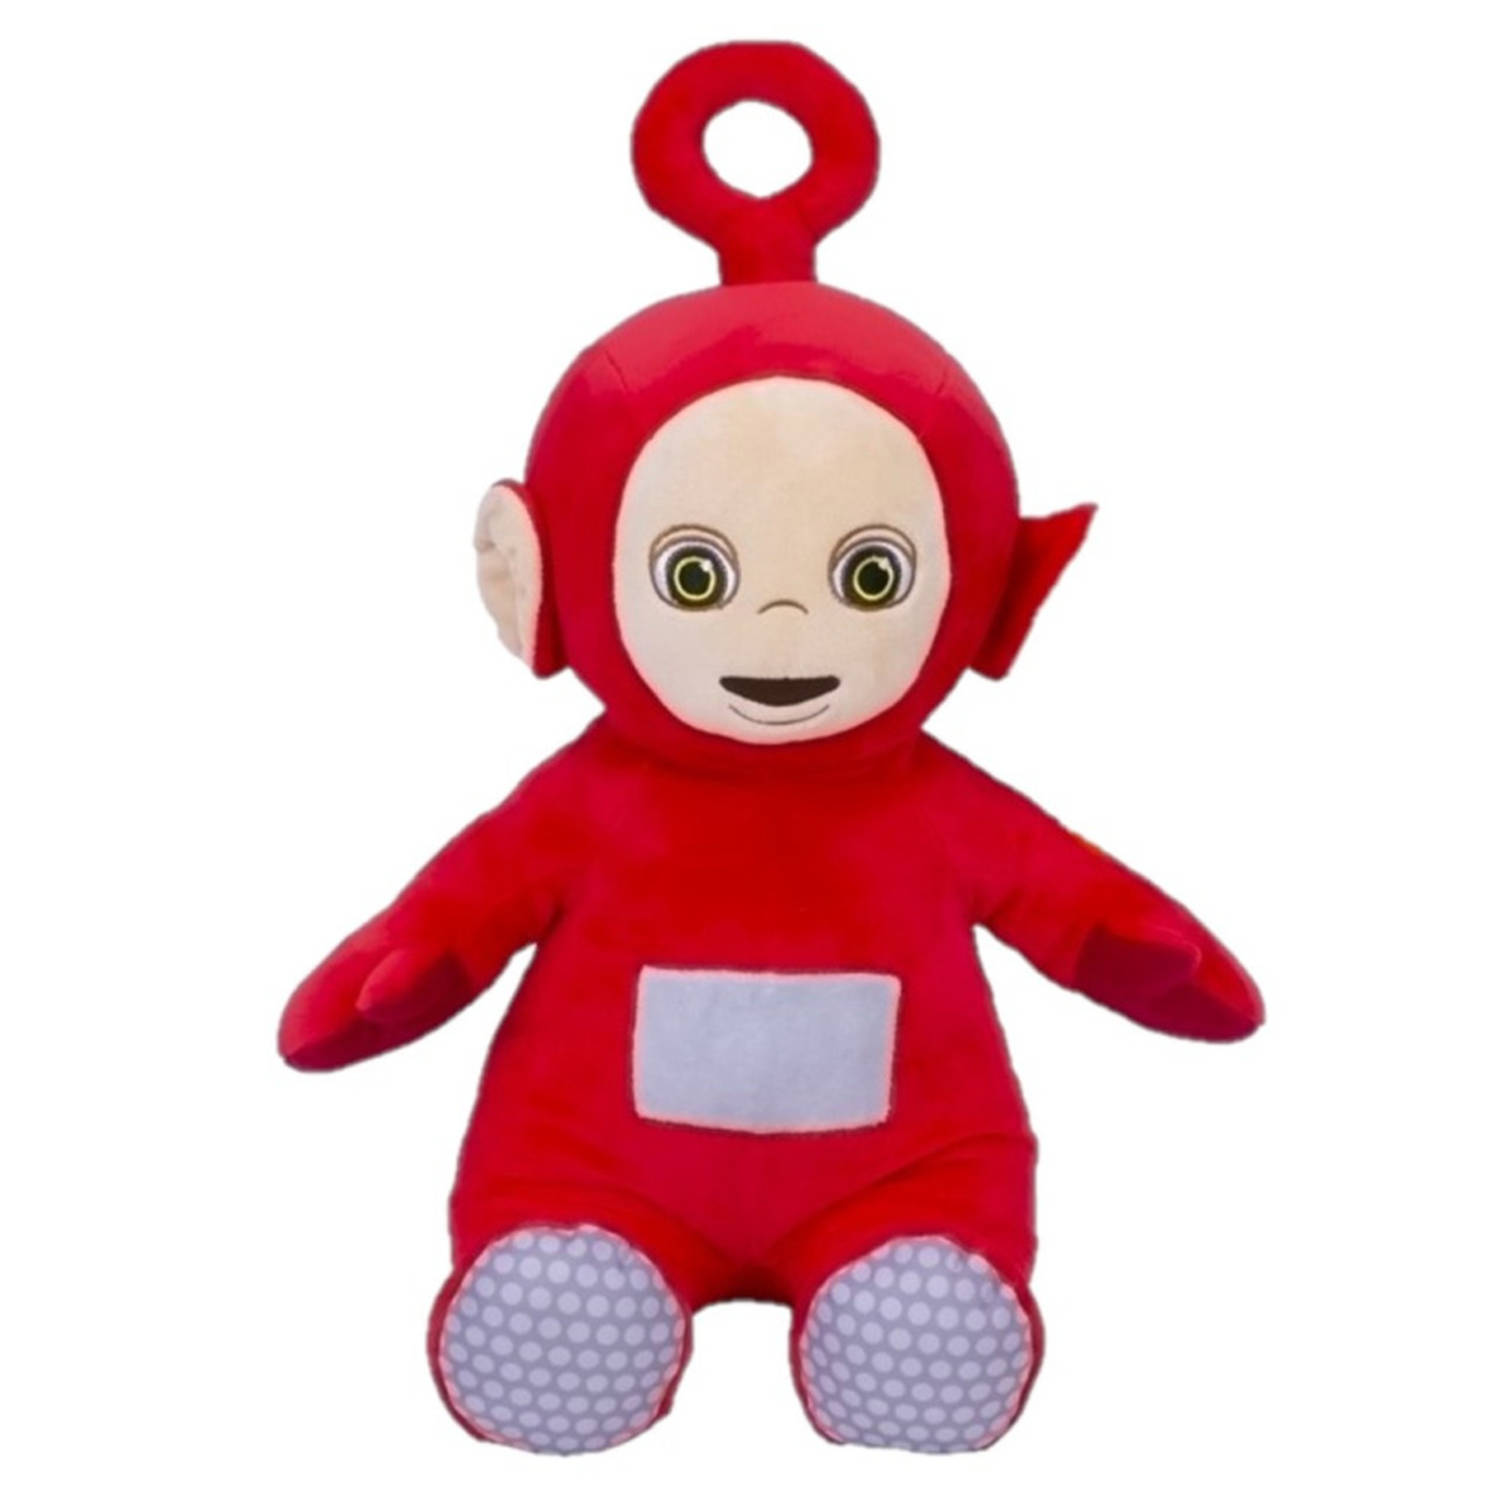 Pluche Teletubbies speelgoed knuffel Po rood 50 cm - Knuffelpop